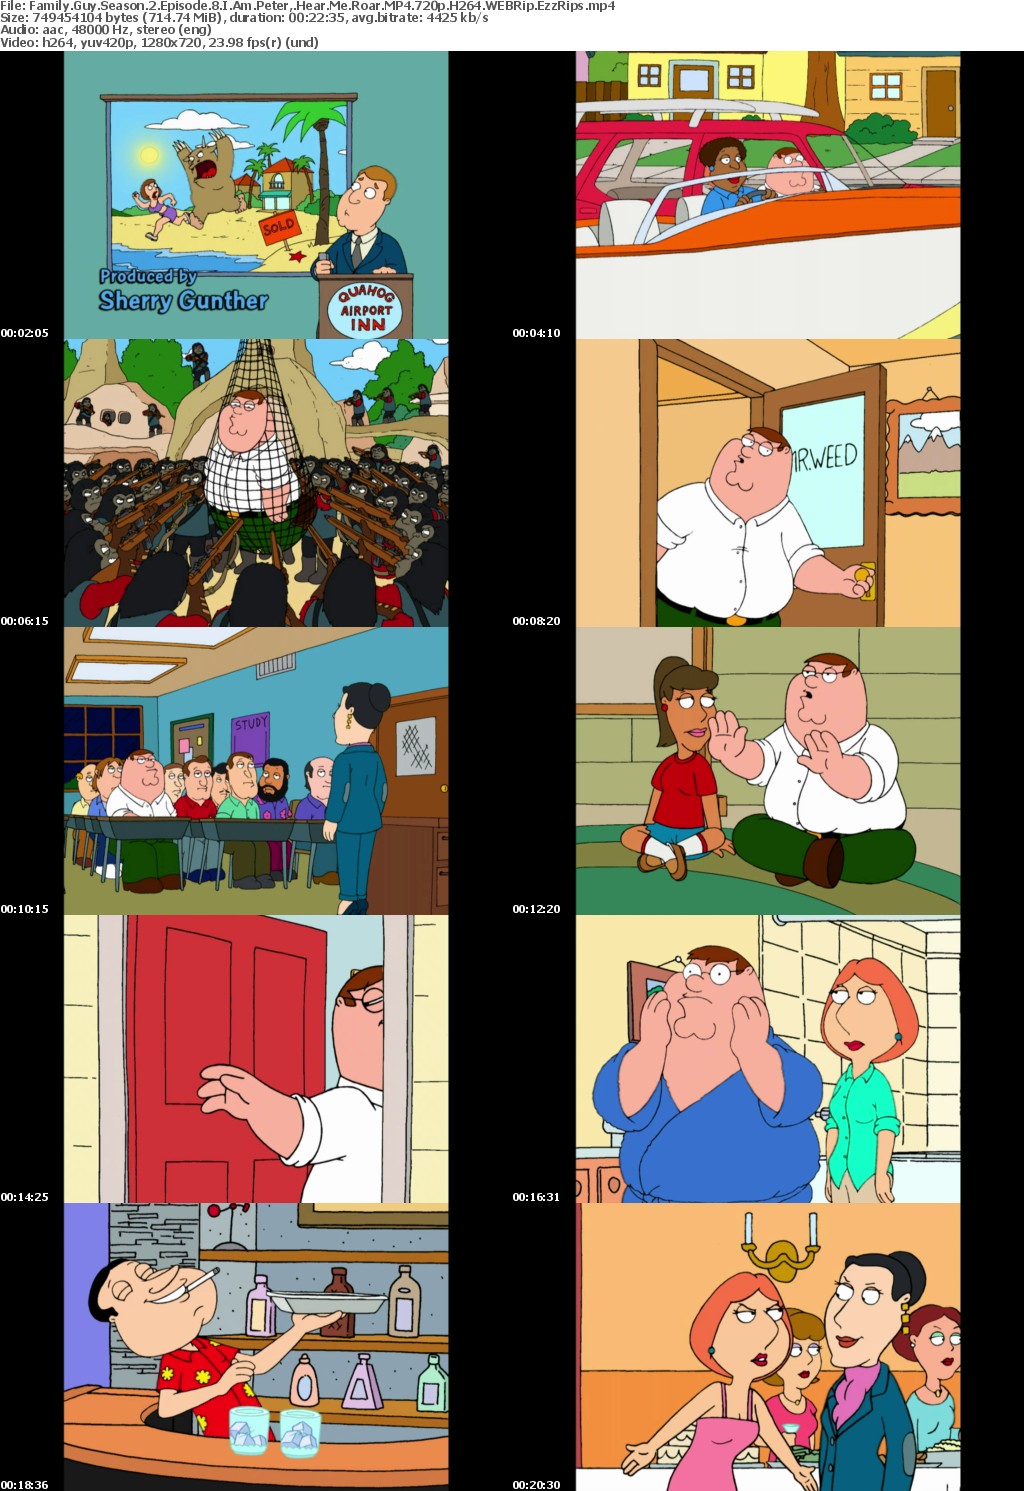 Family Guy Season 2 Episode 8 I Am Peter, Hear Me Roar MP4 720p H264 WEBRip EzzRips